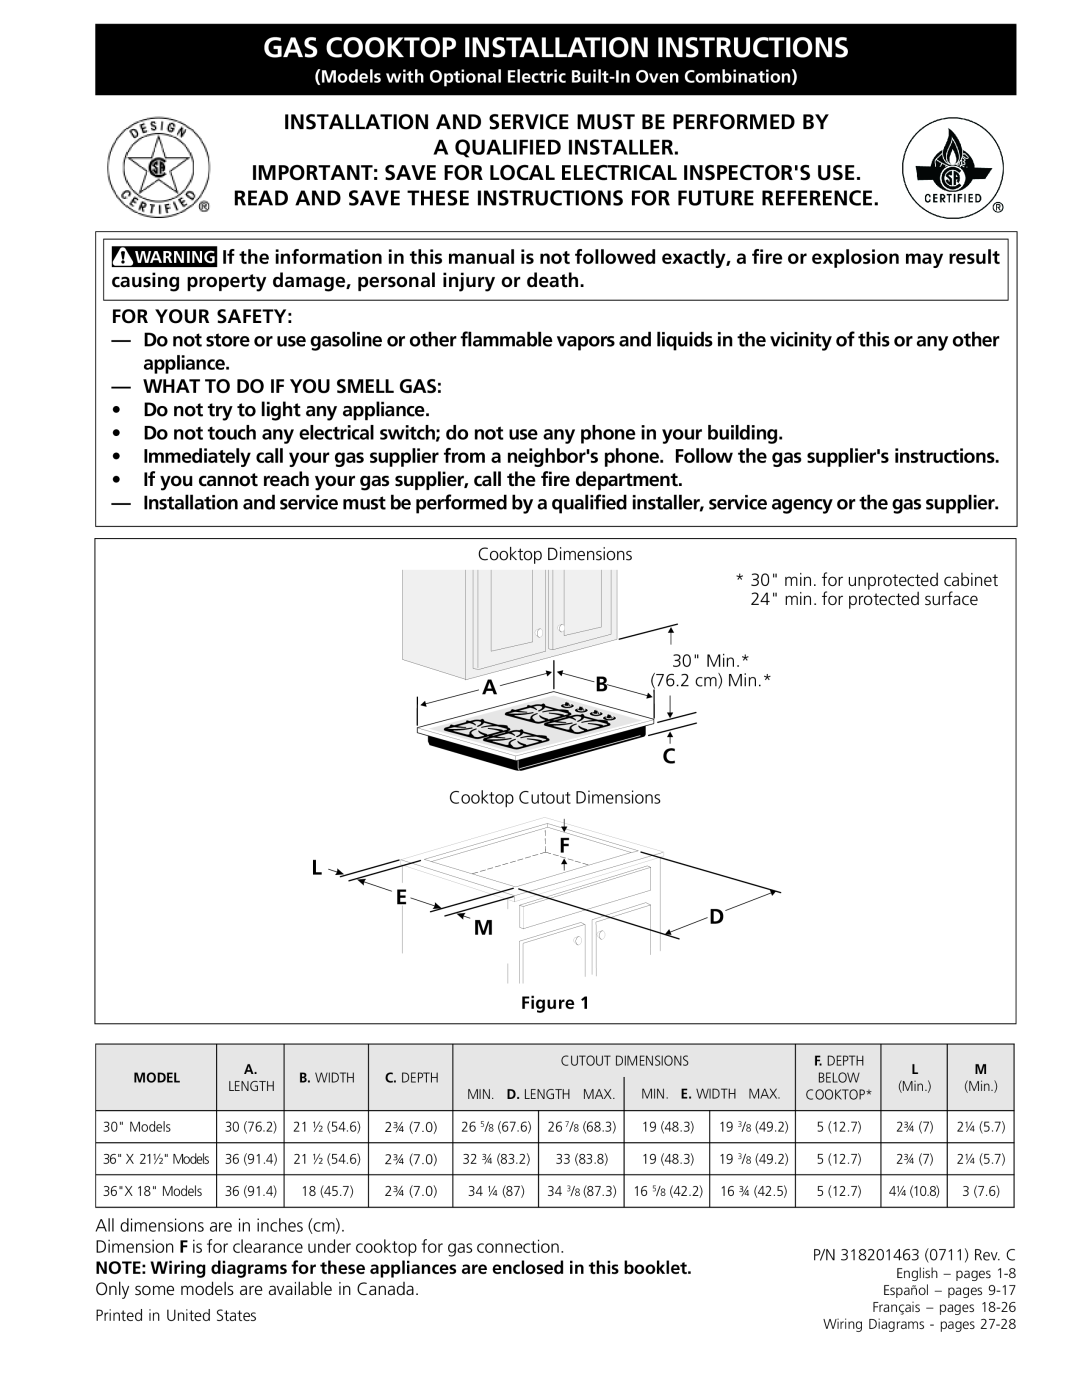 Frigidaire 318201463 (0711), FGC36S5EC dimensions Gas Cooktop Installation Instructions 